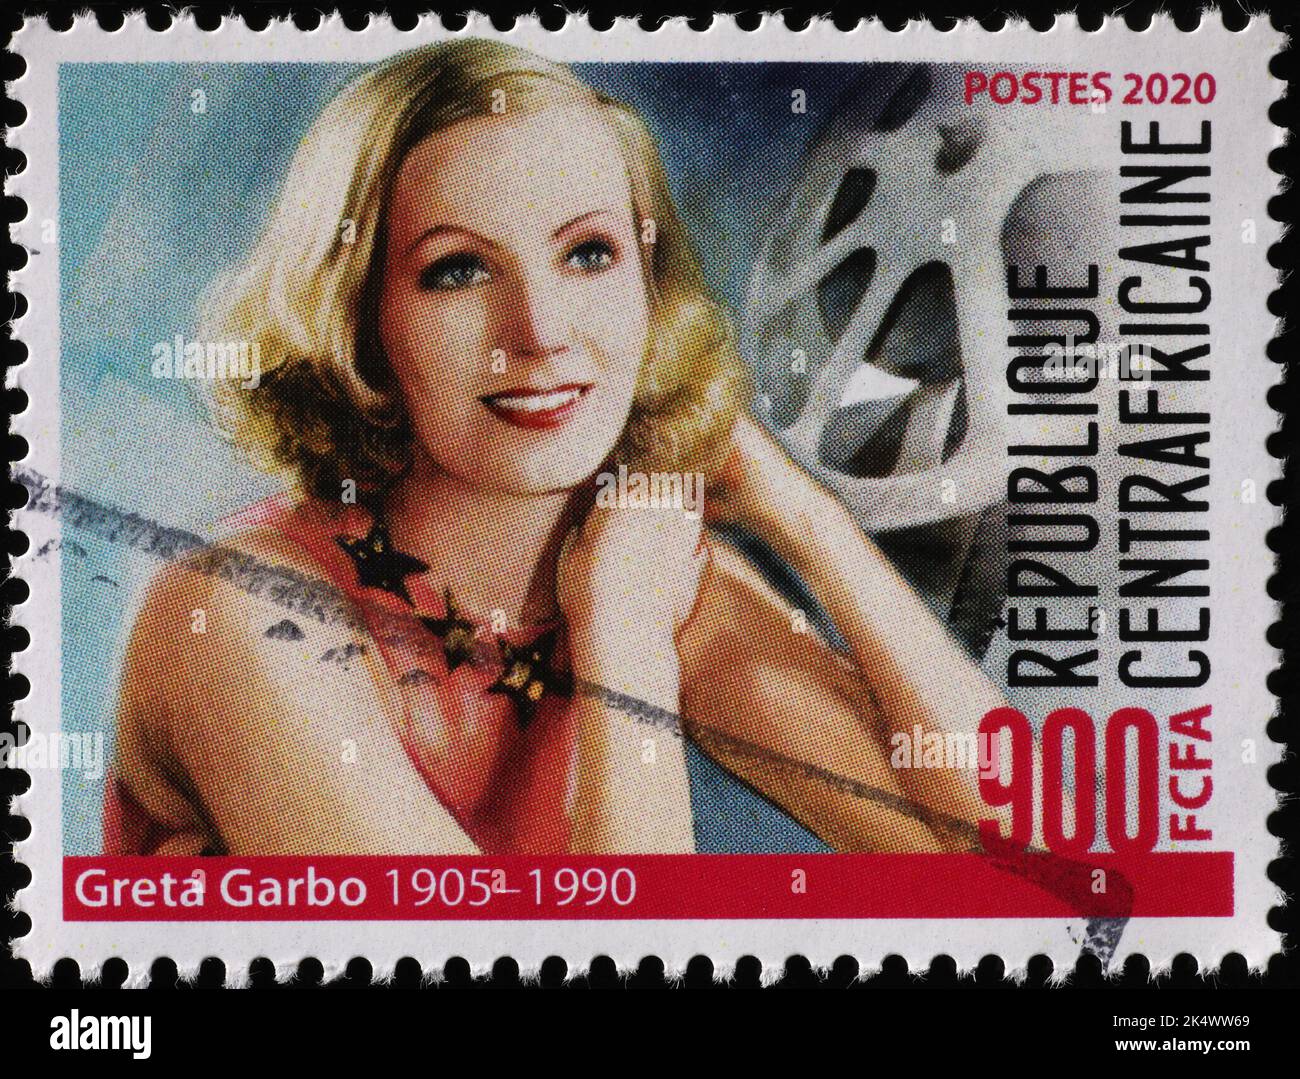 Greta Garbo portrait on african postage stamp Stock Photo